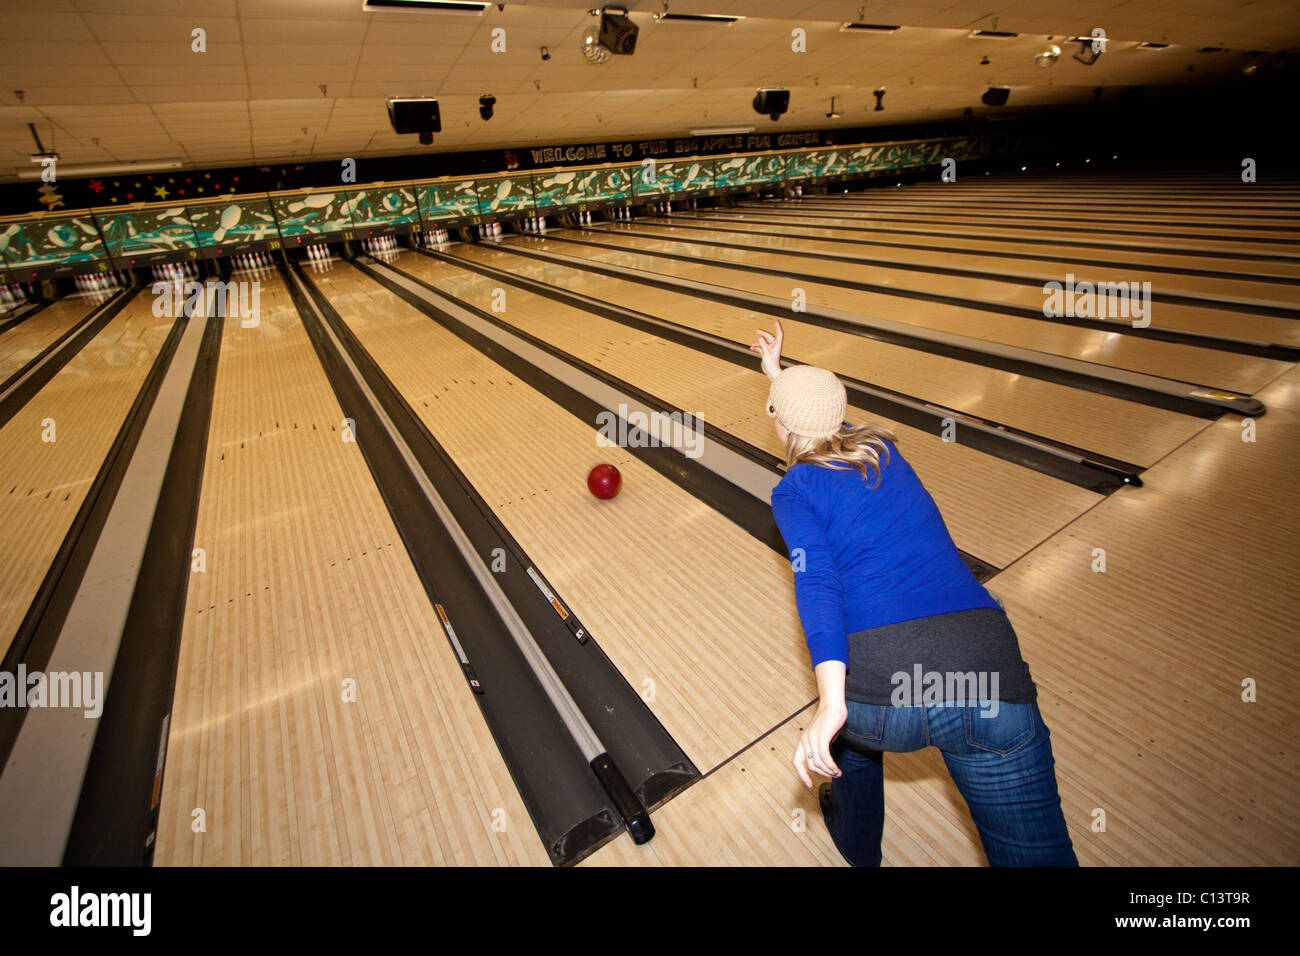 amateur tenpin bowling club